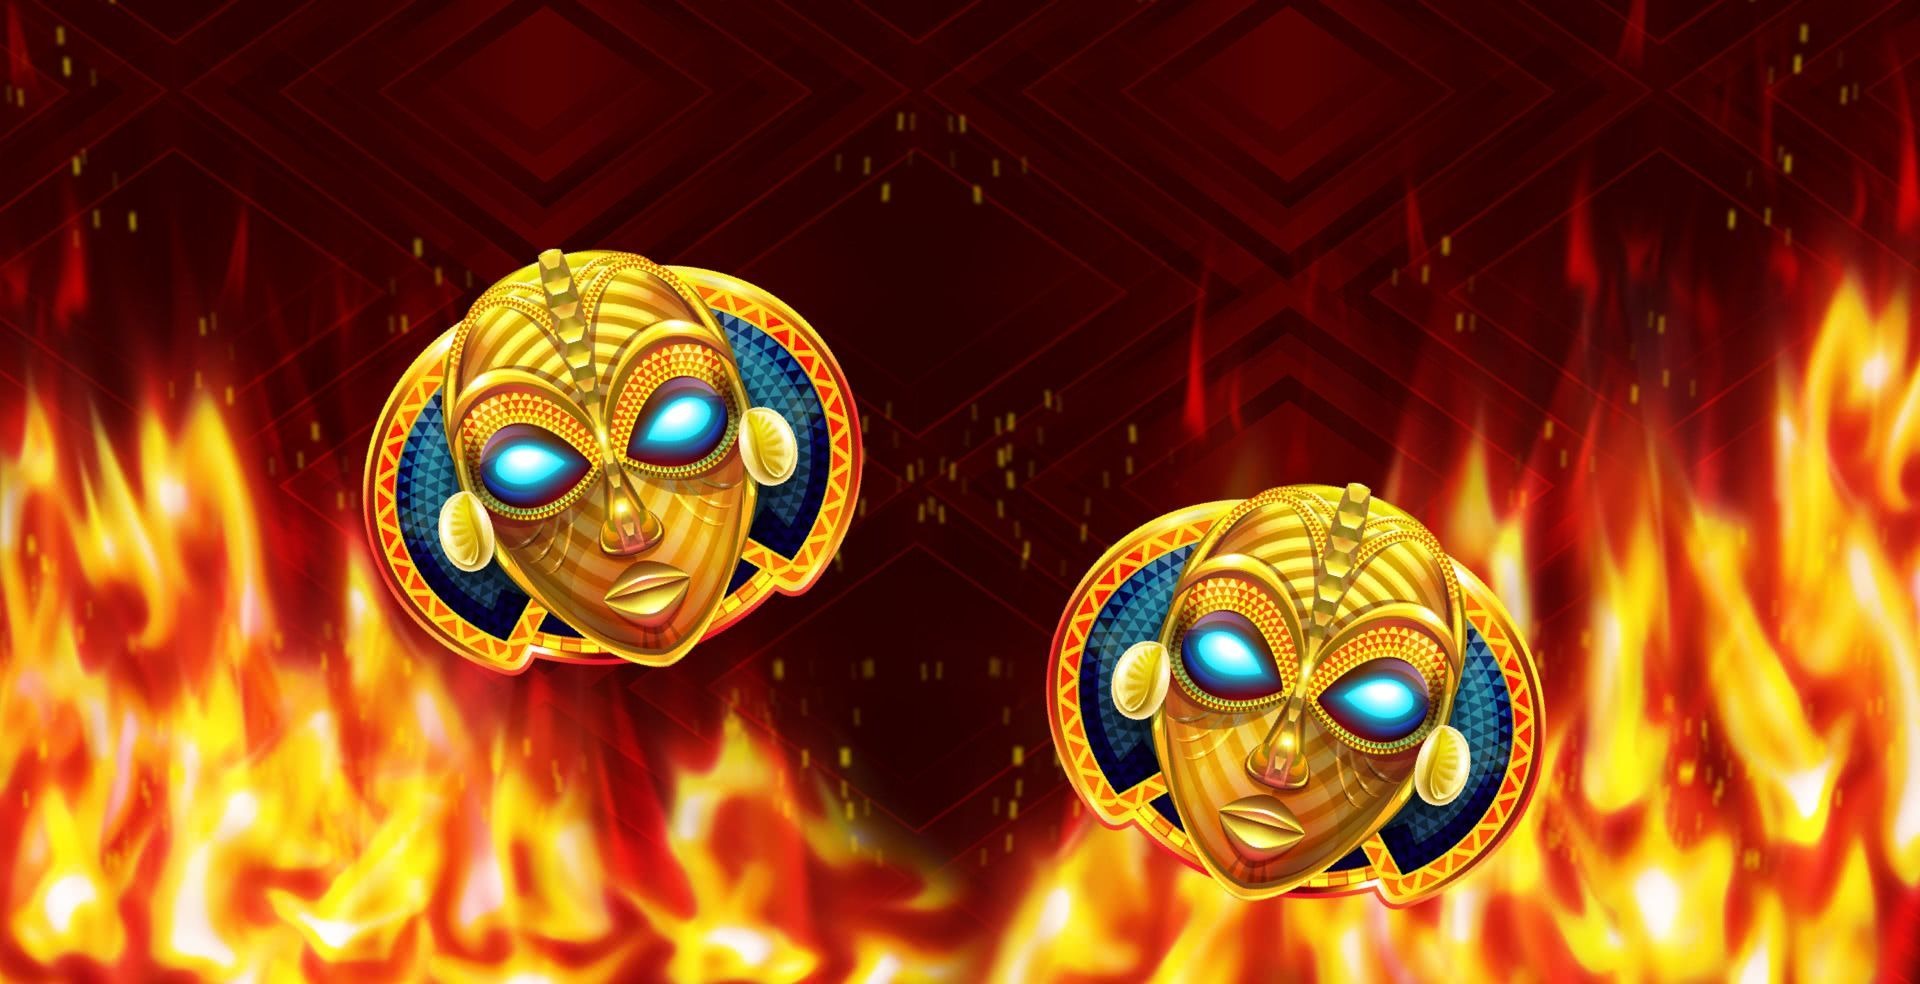 Informasi Dasar tentang 9 Masks of Fire